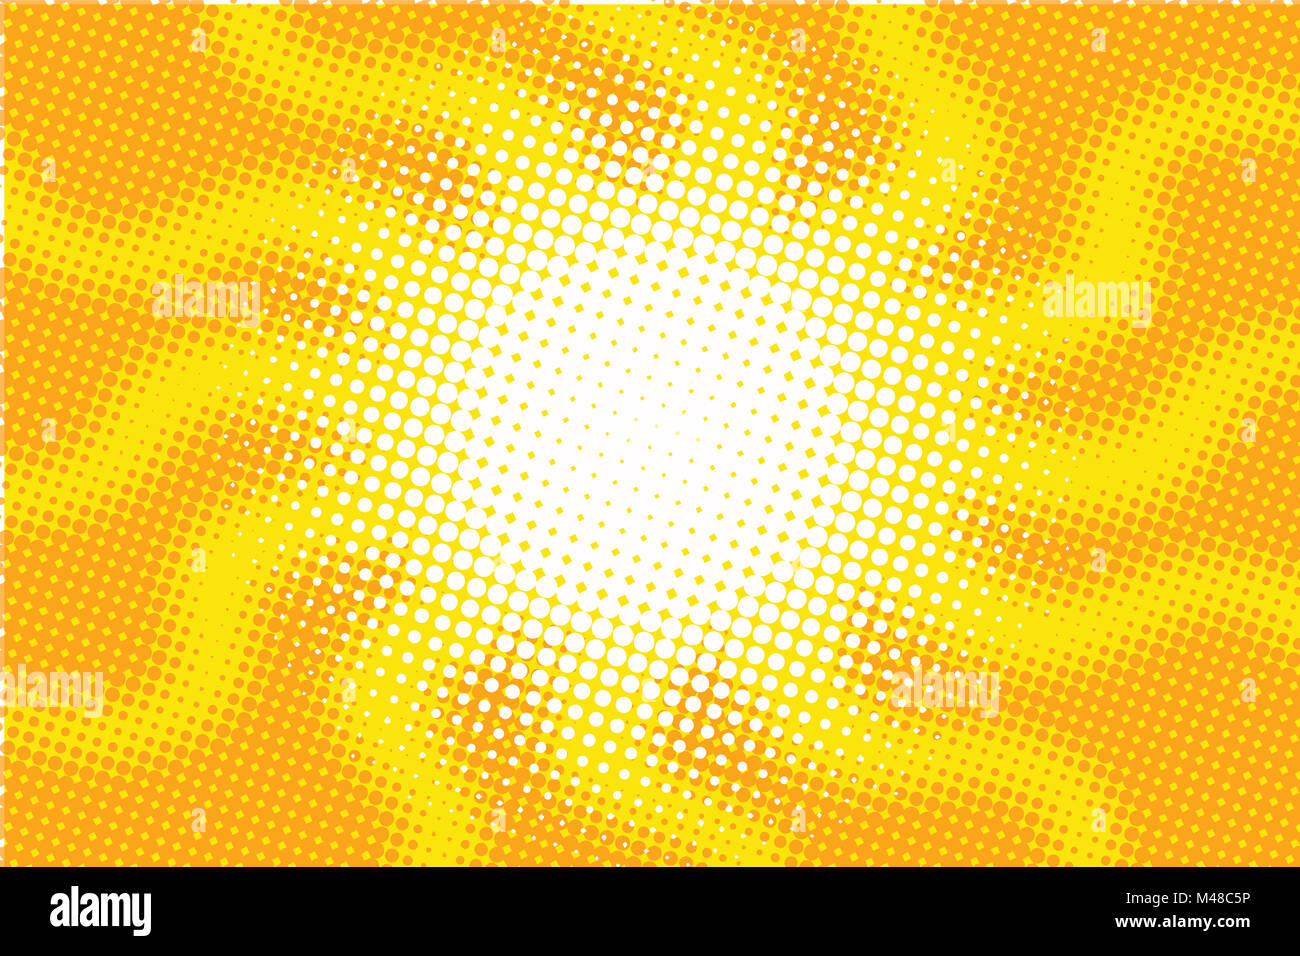 Retro sun with rays pop art vector illustration Stock Photo